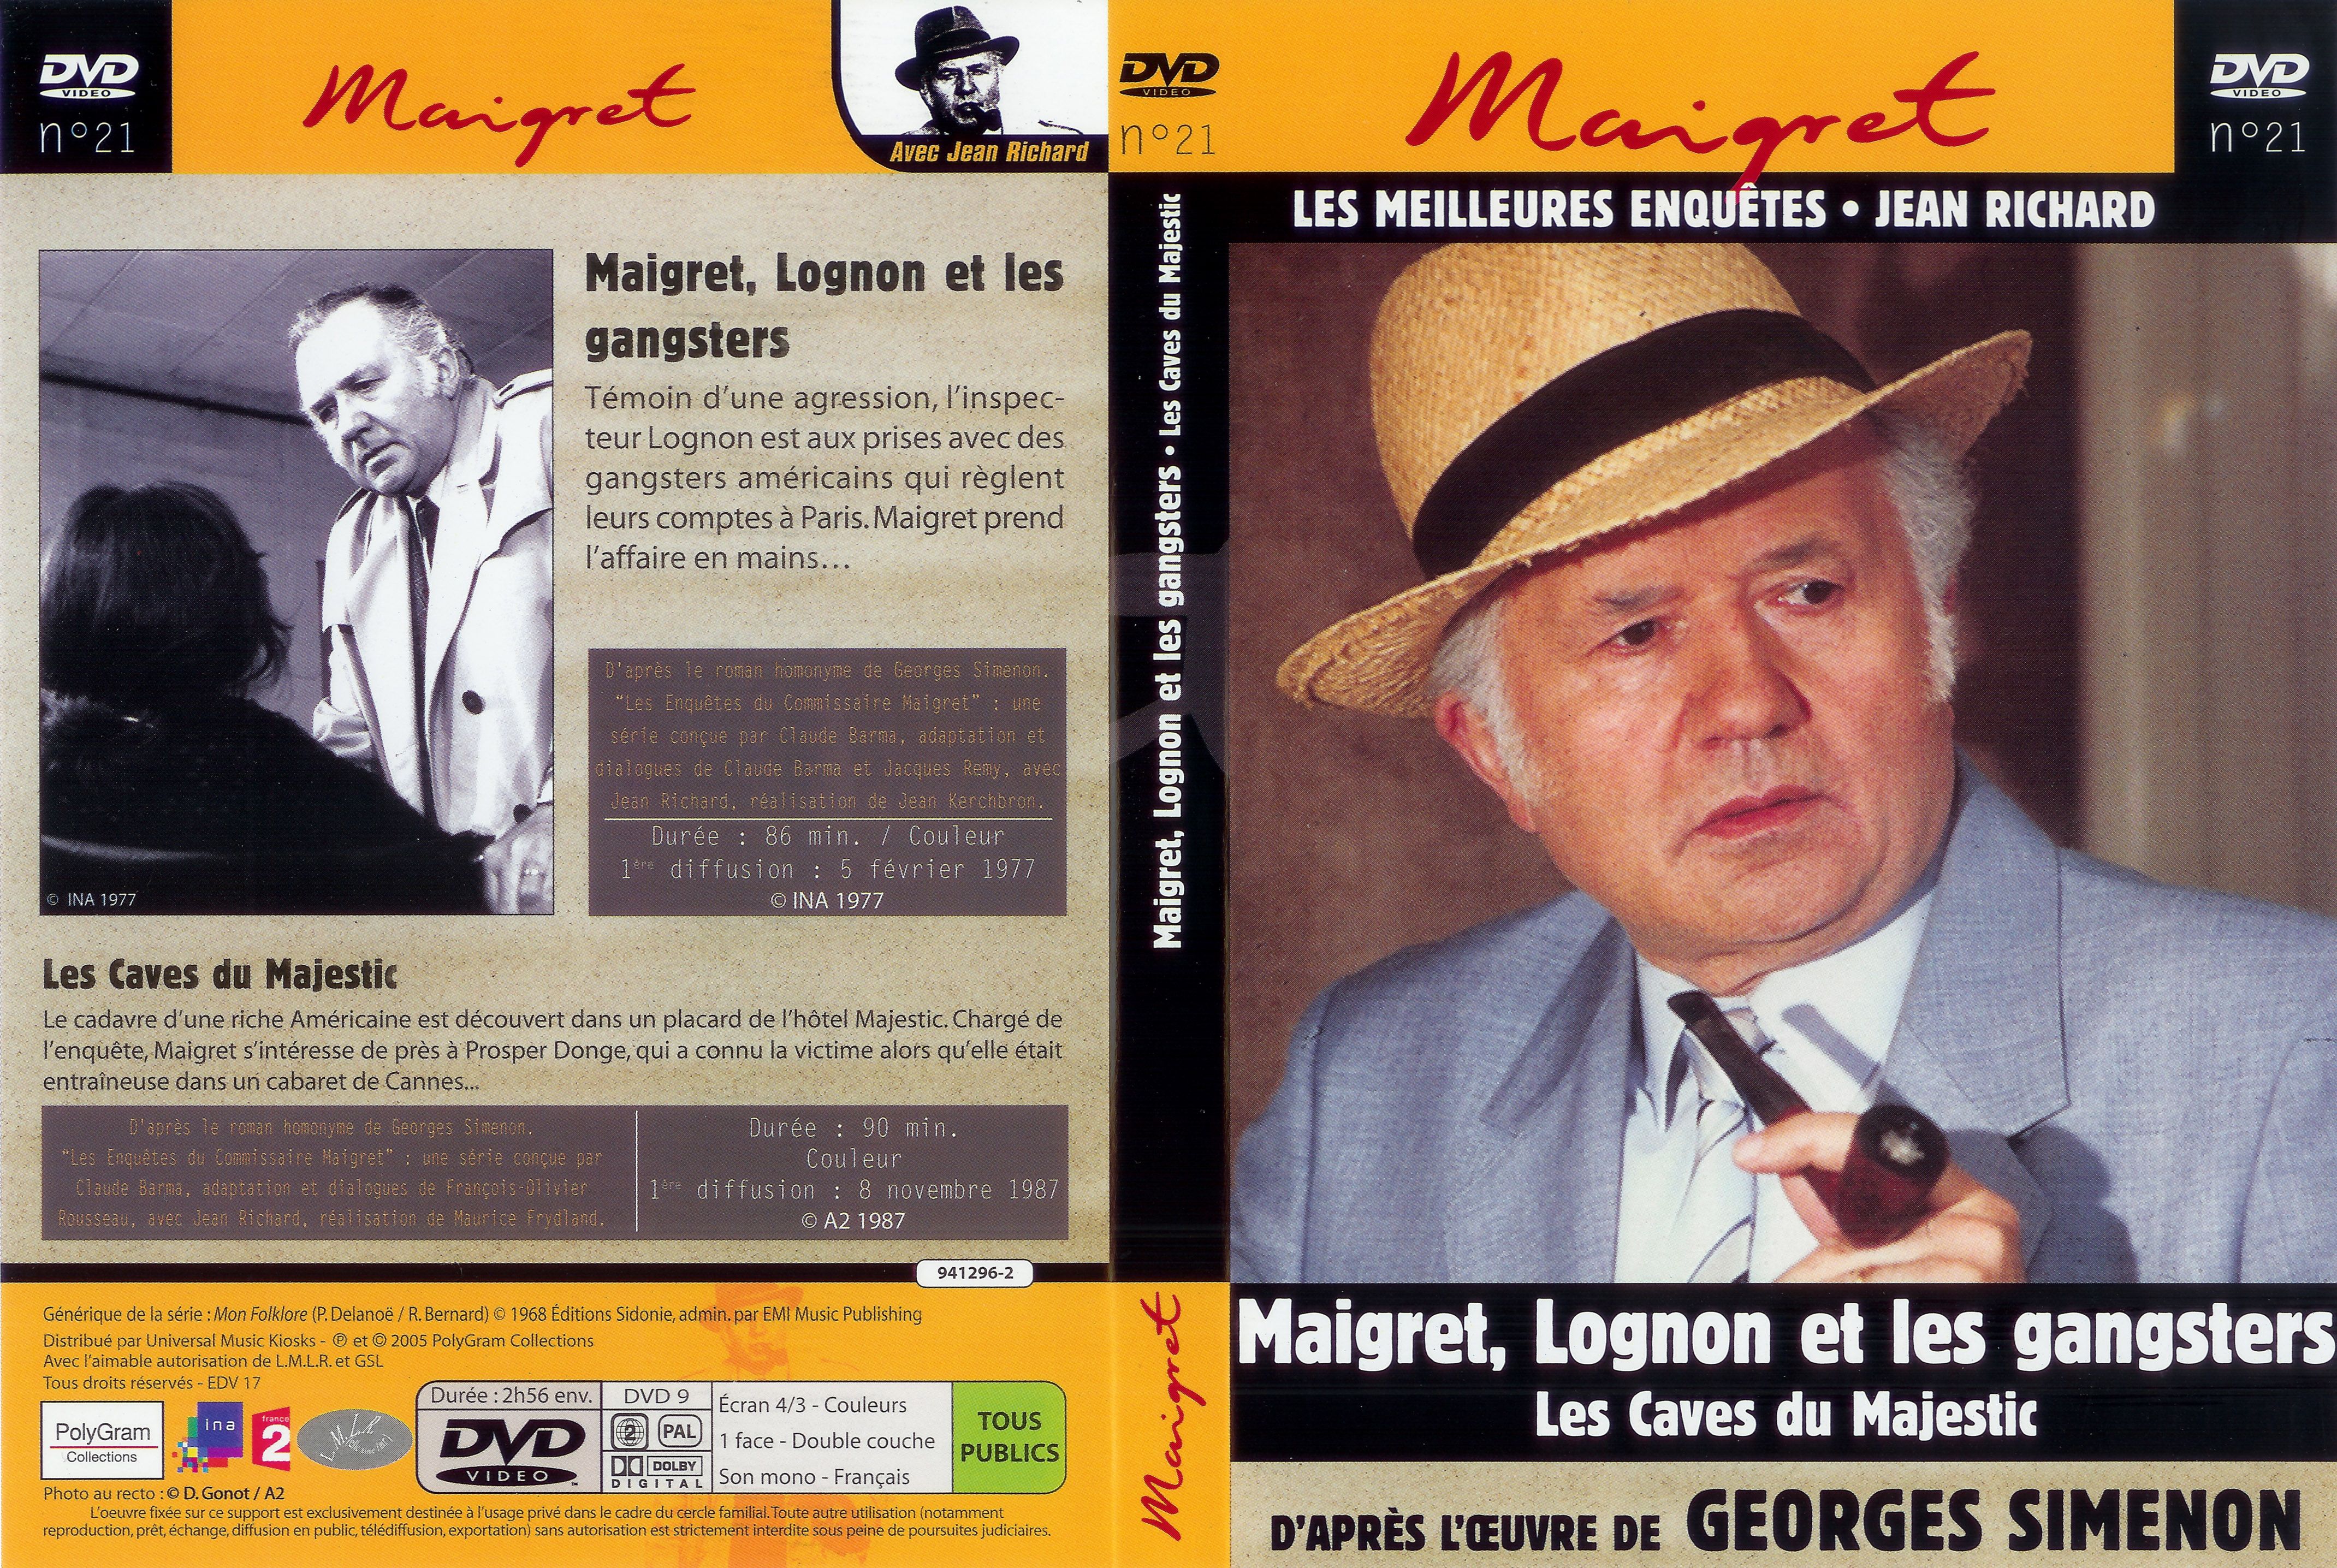 Jaquette DVD Maigret (Jean Richard) vol 21